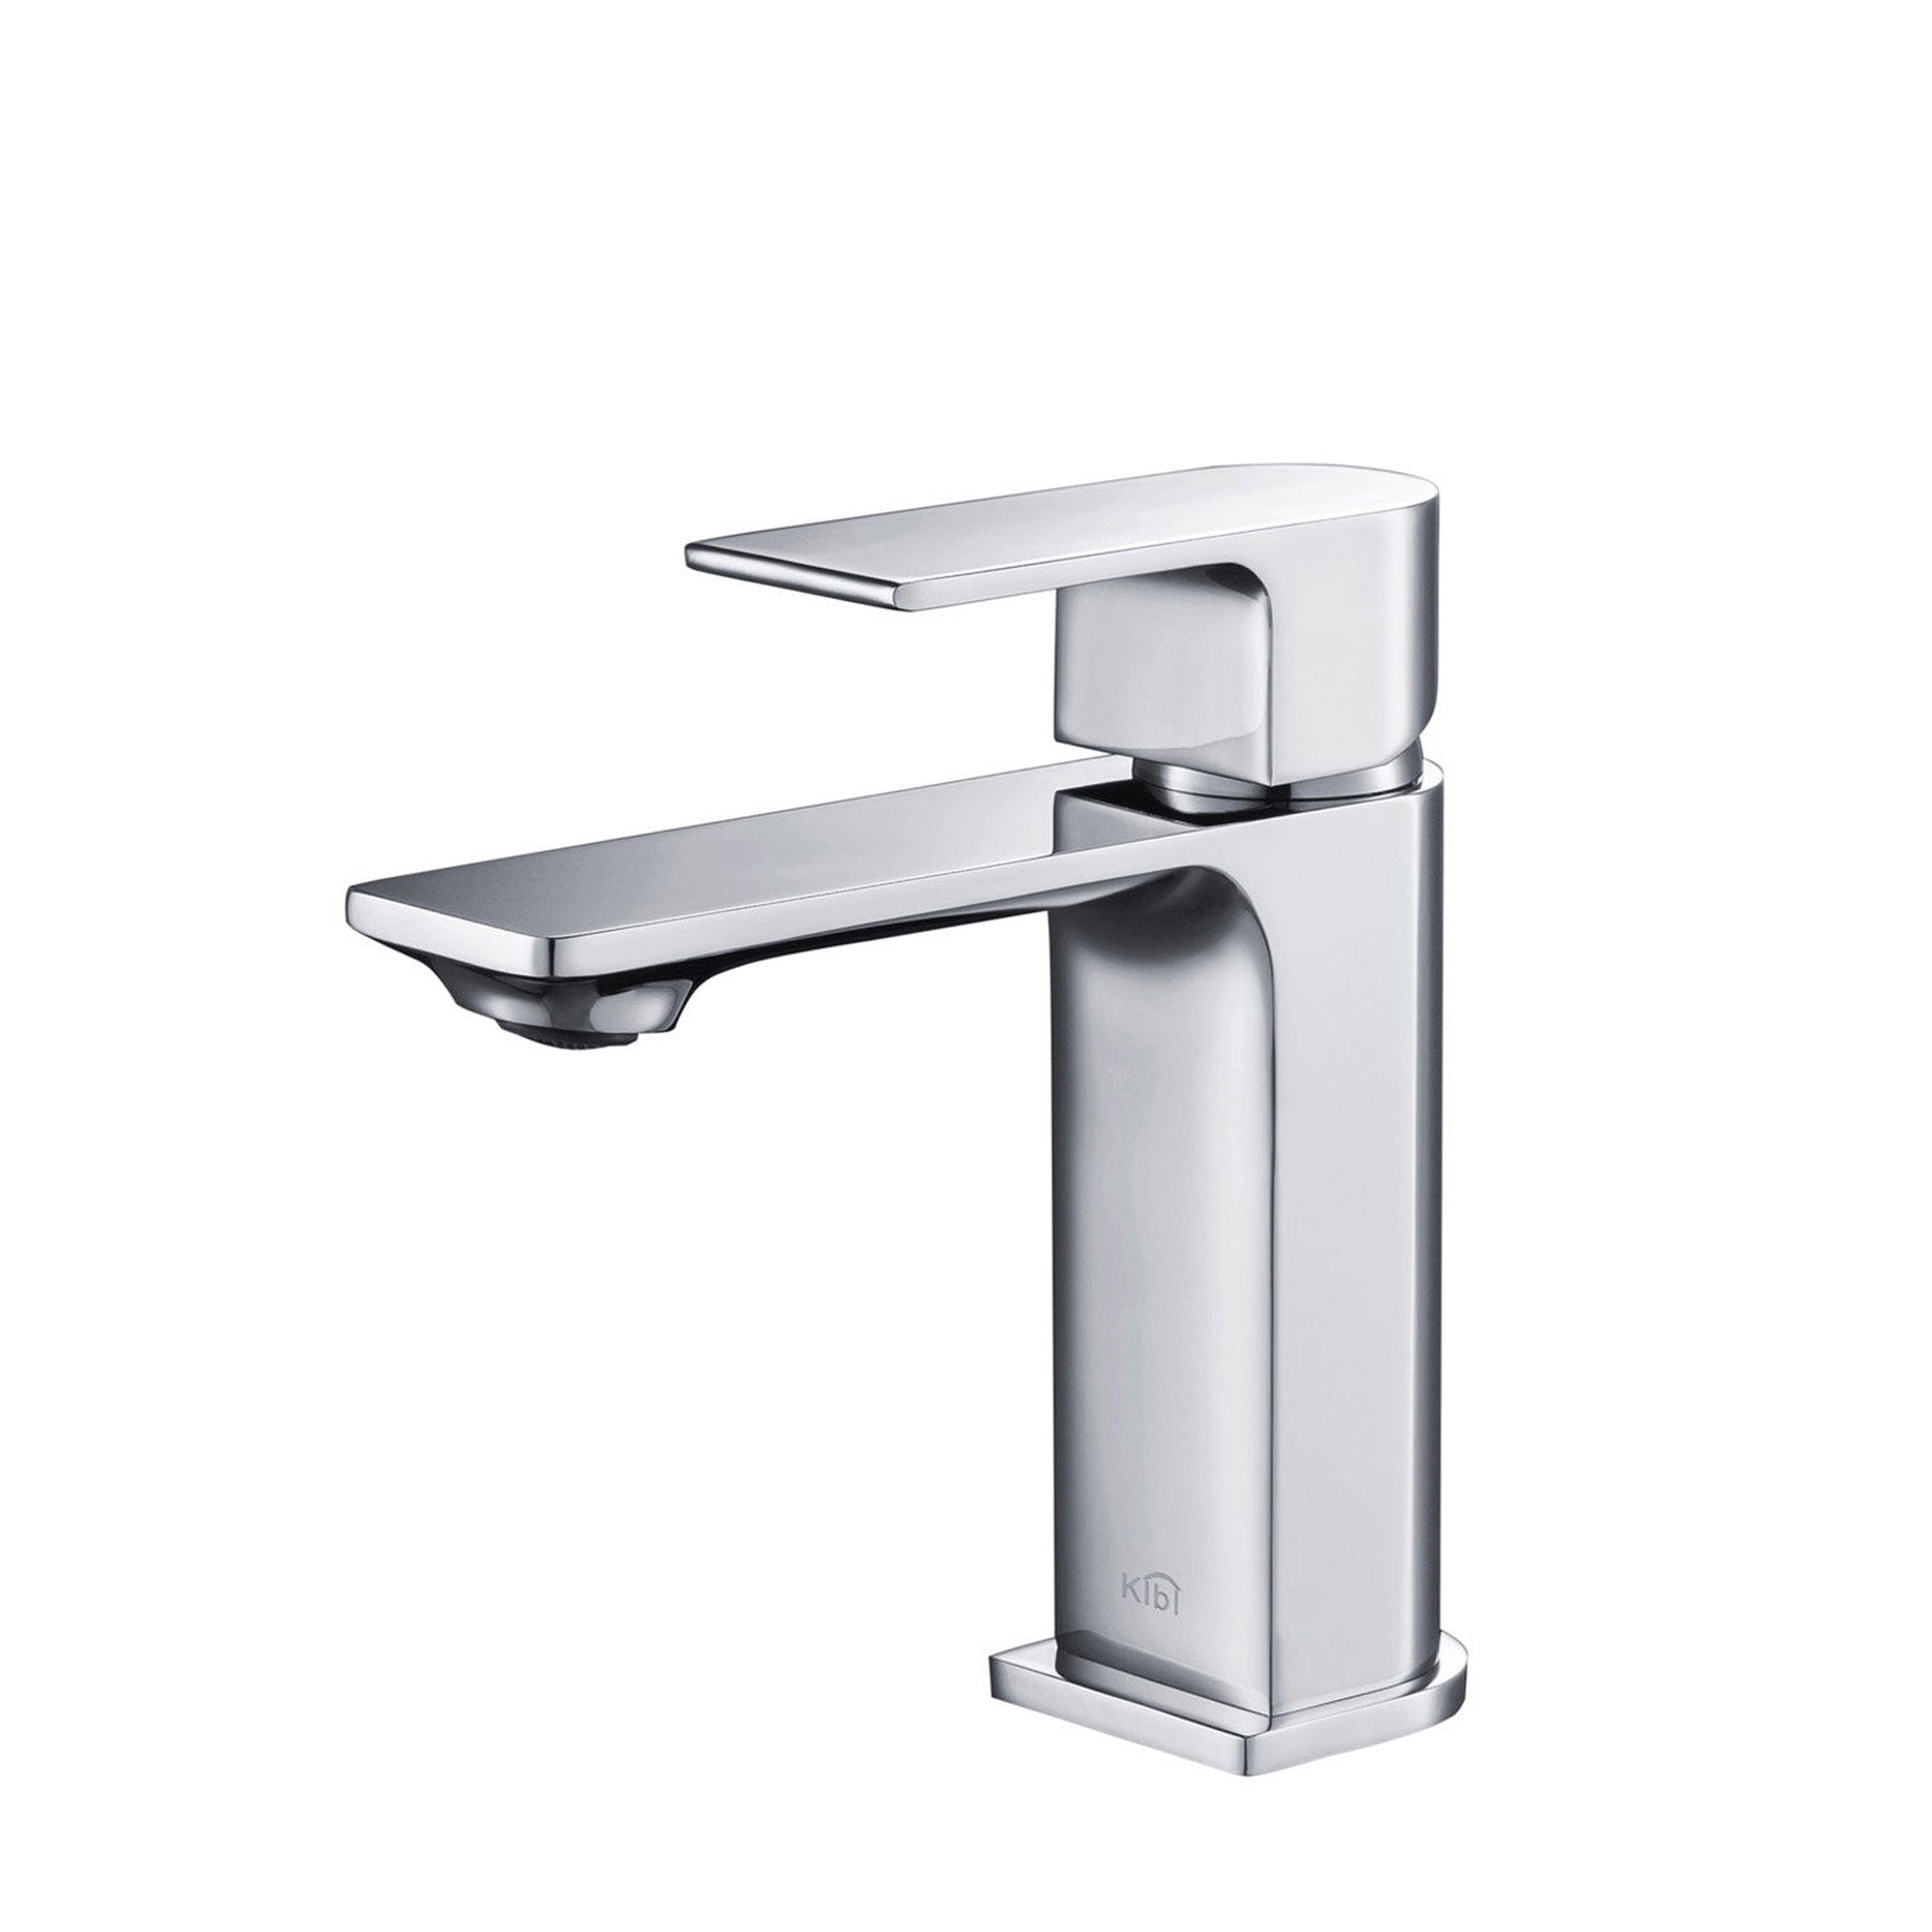 KIBI, KIBI Mirage Single Handle Chrome Solid Brass Bathroom Vanity Sink Faucet